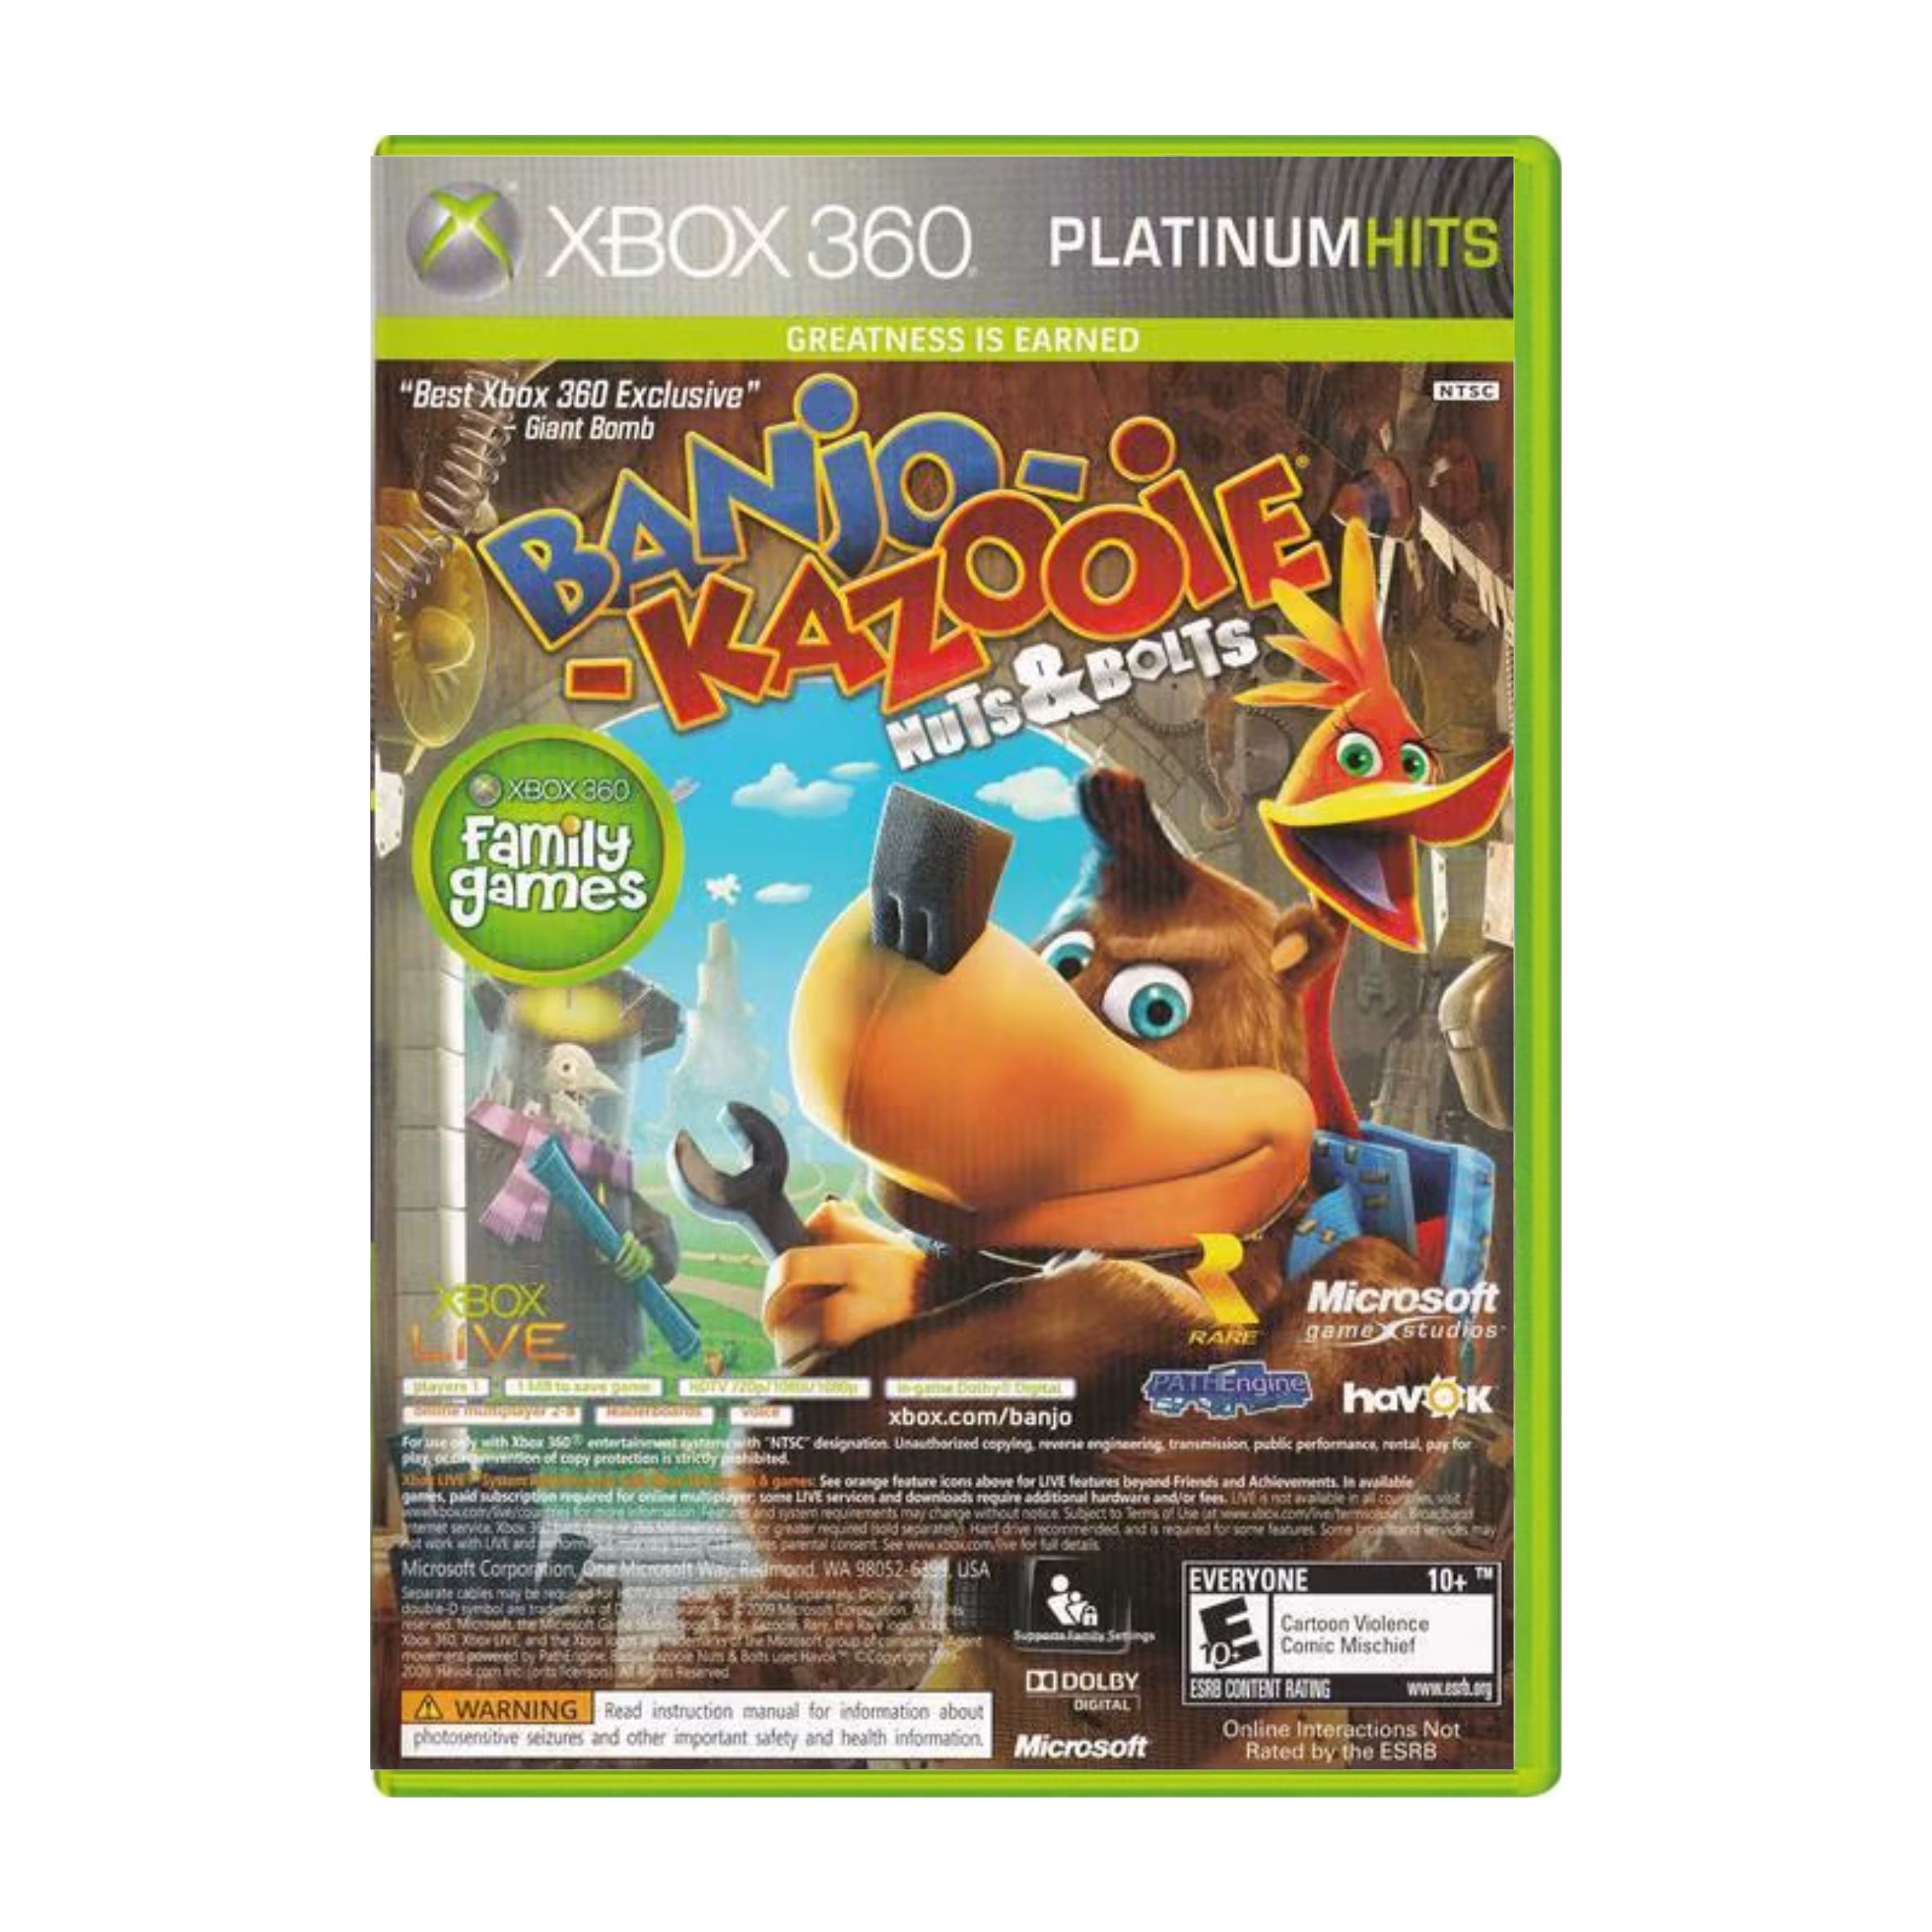 Banjo Kazooie Nuts & Bolts Xbox 360 Usado Retro Capa Reimpre